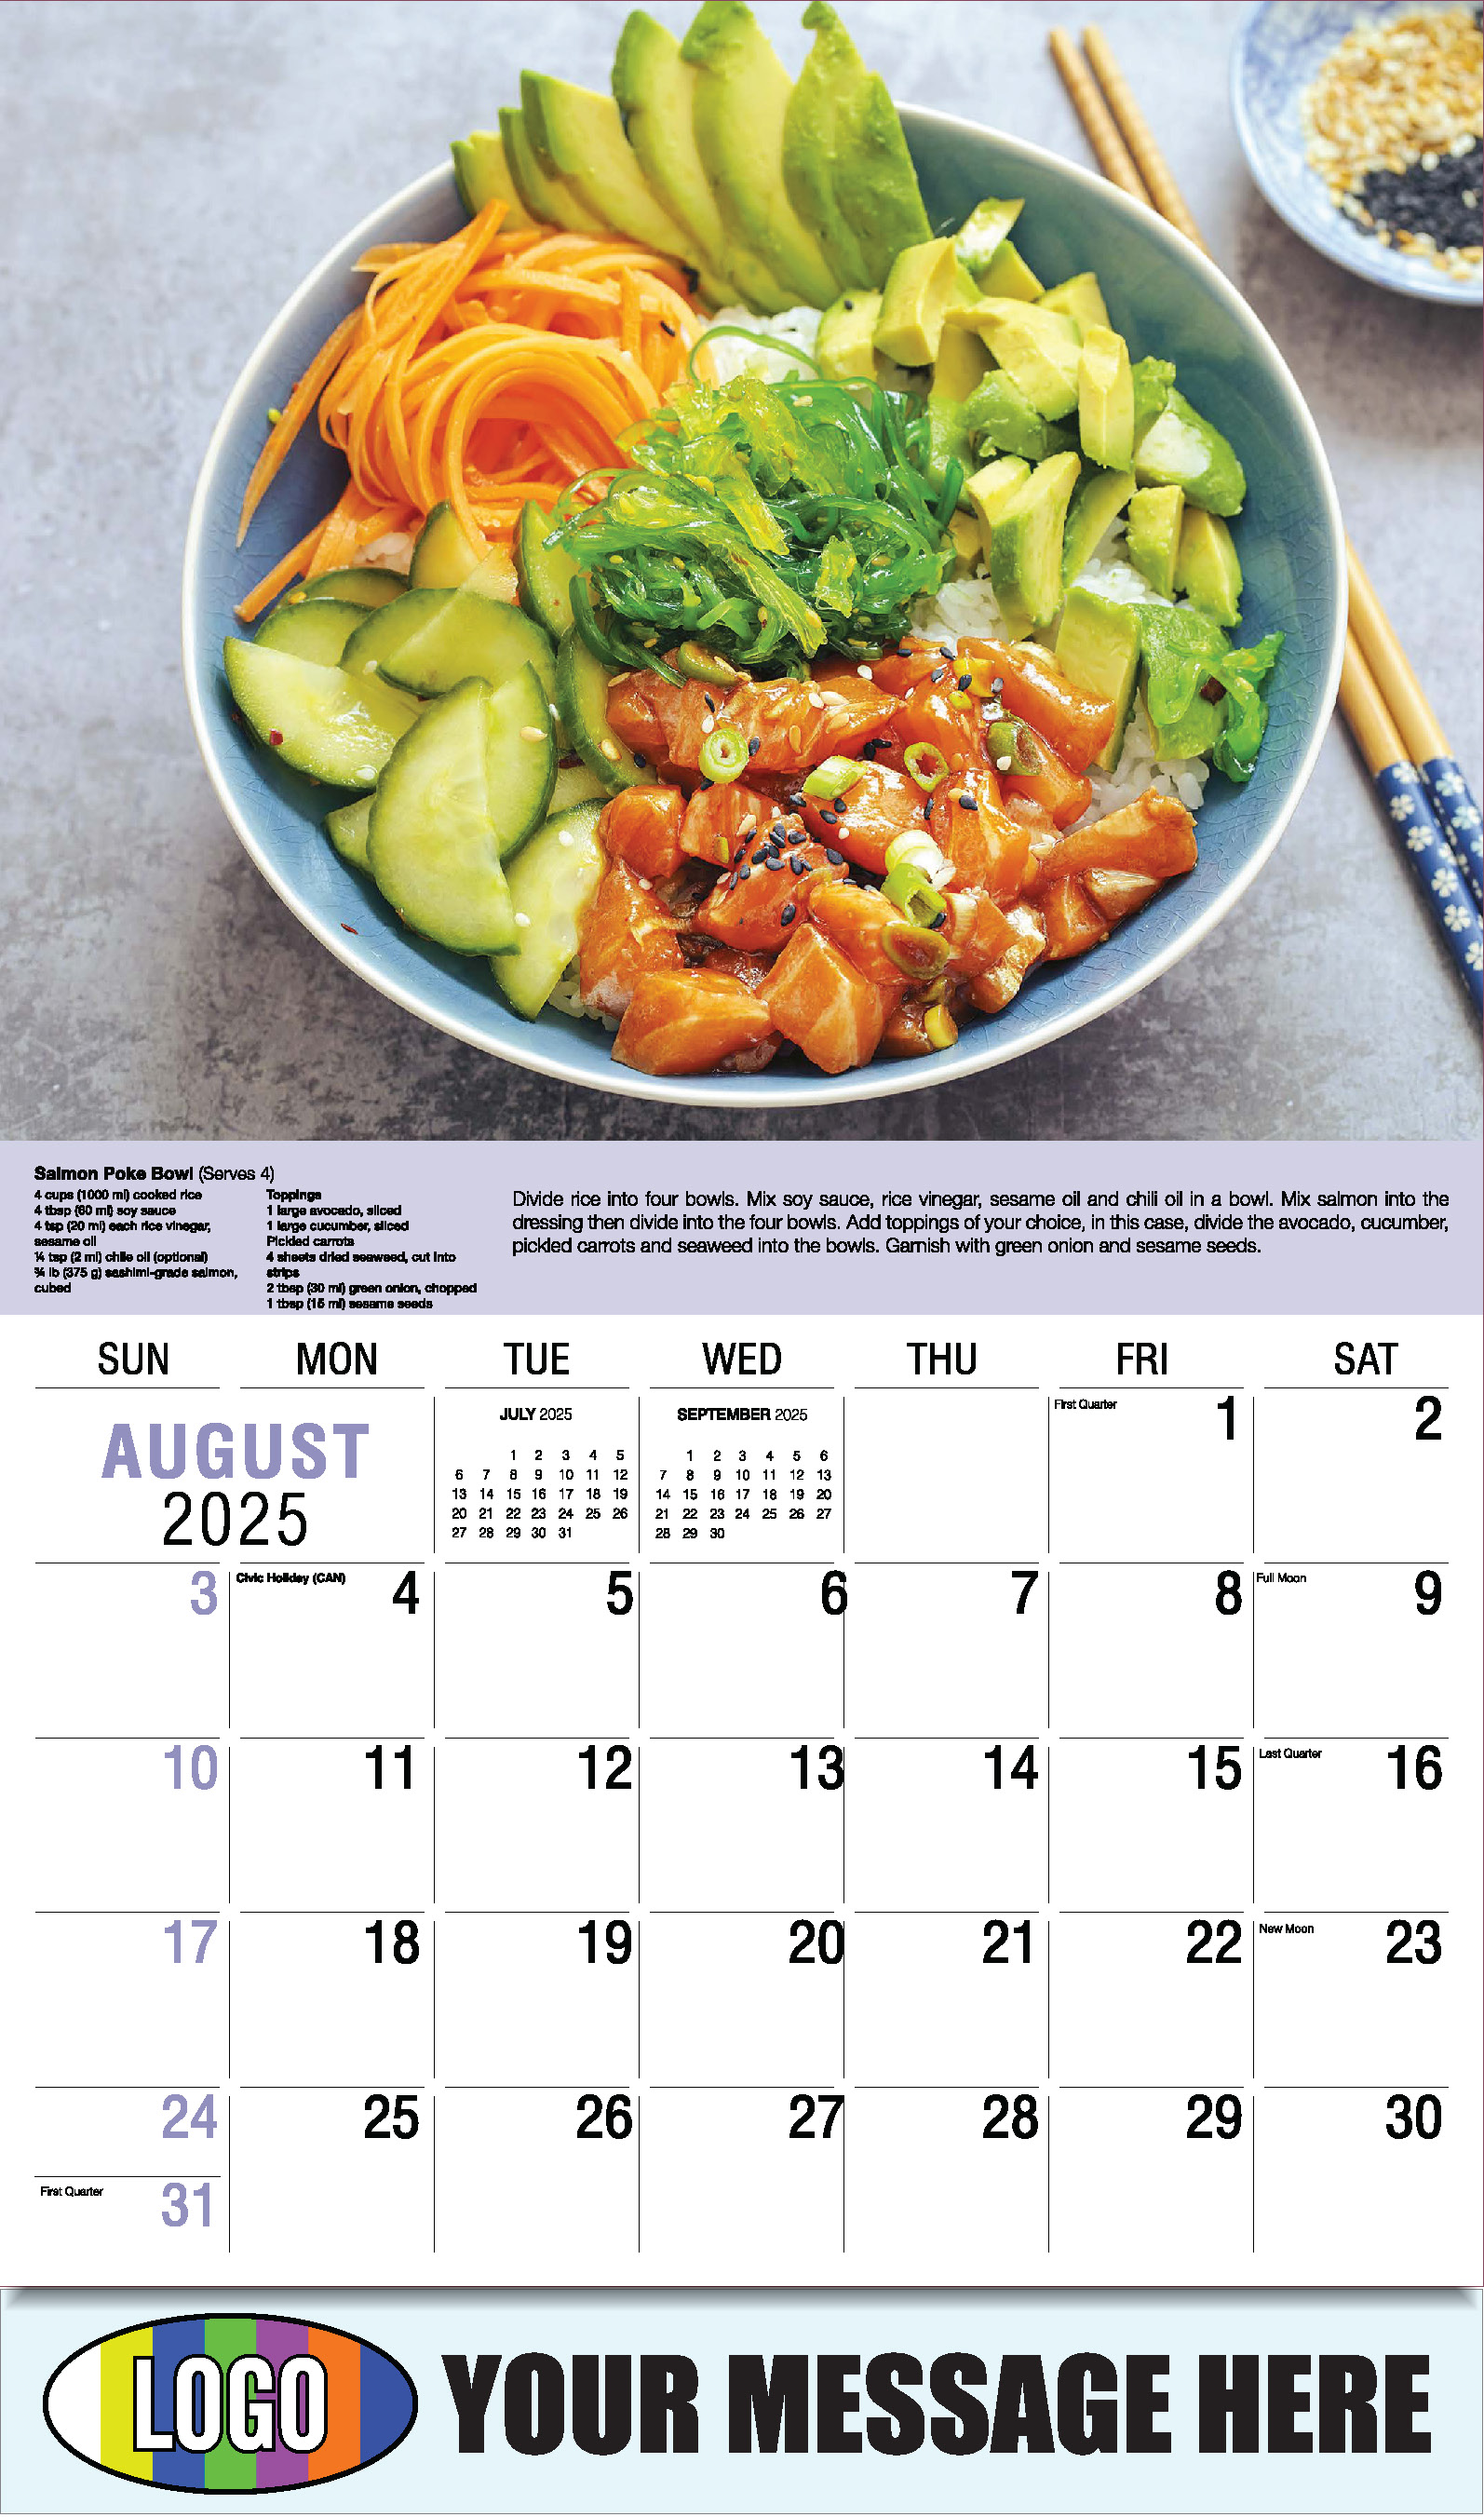 Recipes 2025 Business Promotional Calendar - August